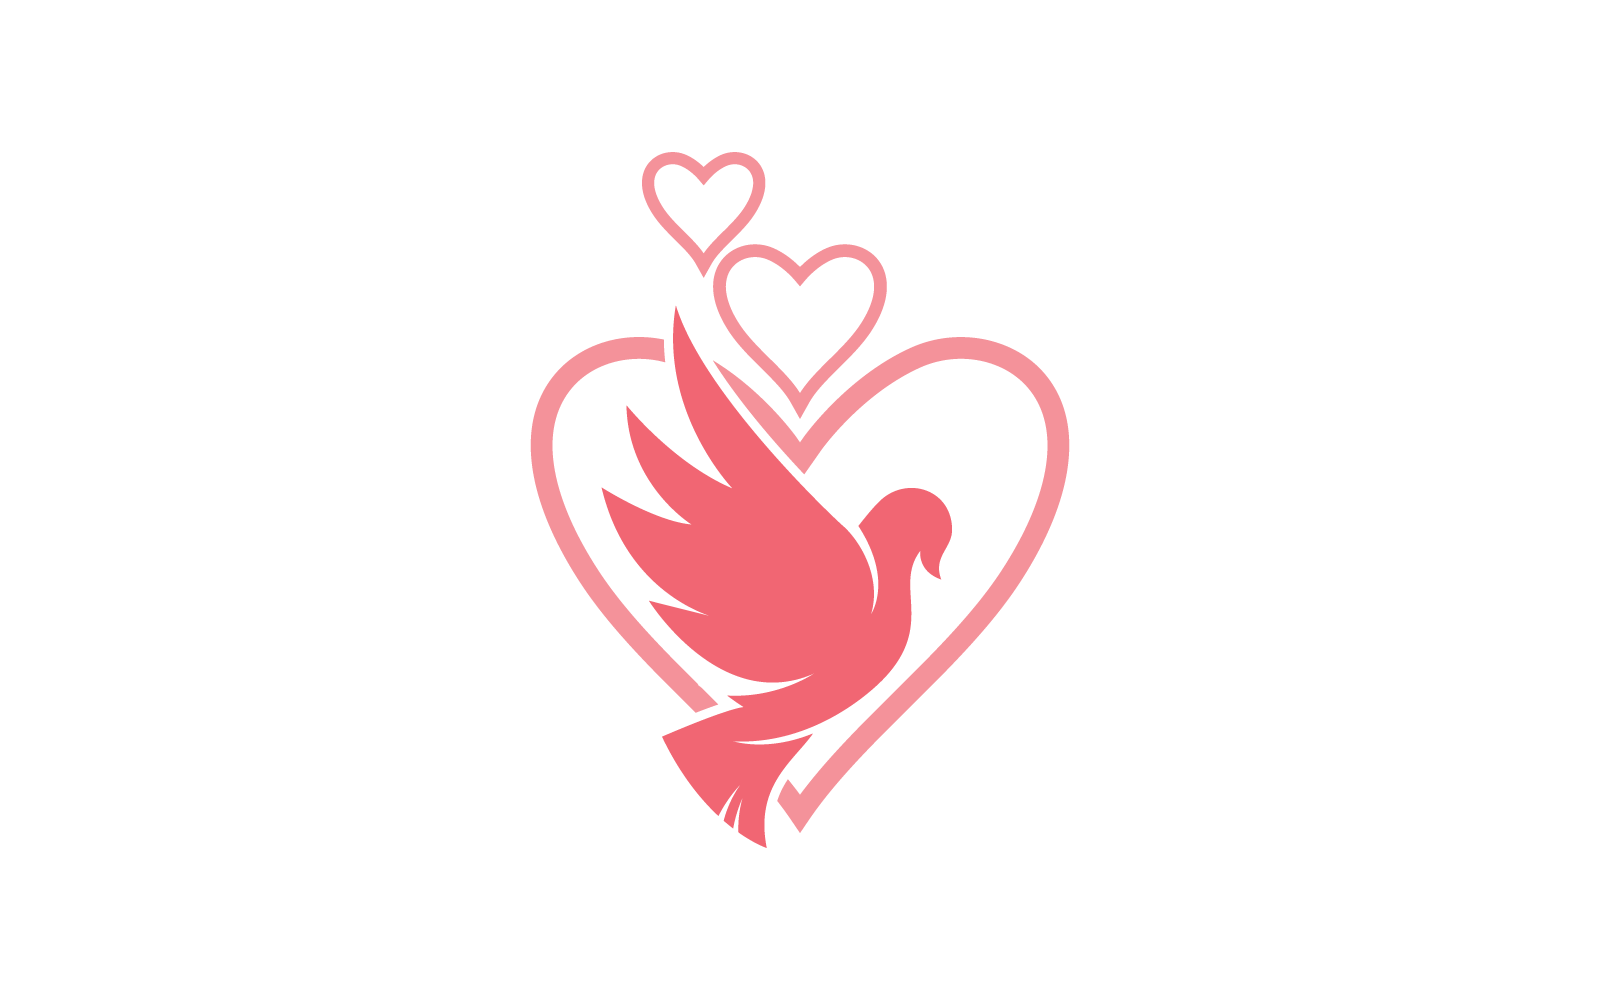 Dove bird logo illustration vector design